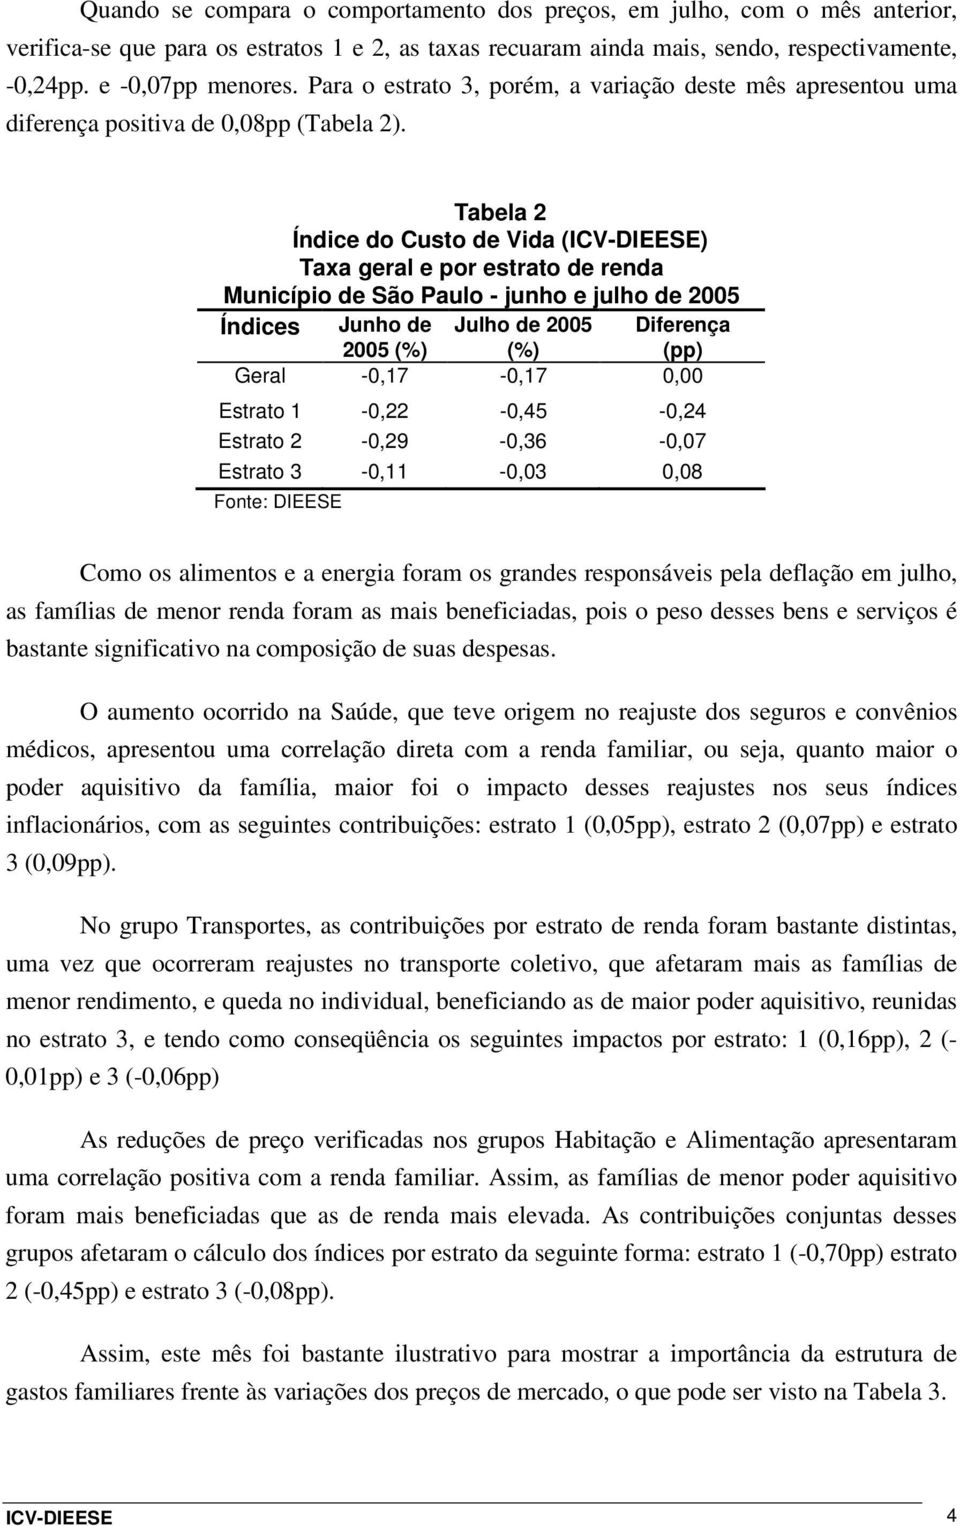 Tabela 2 Índice do Custo de Vida (ICV-DIEESE) geral e por estrato de renda Município de São Paulo - junho e julho de 2005 Índices Junho de 2005 (%) Julho de 2005 (%) Diferença (pp) Geral -0,17-0,17